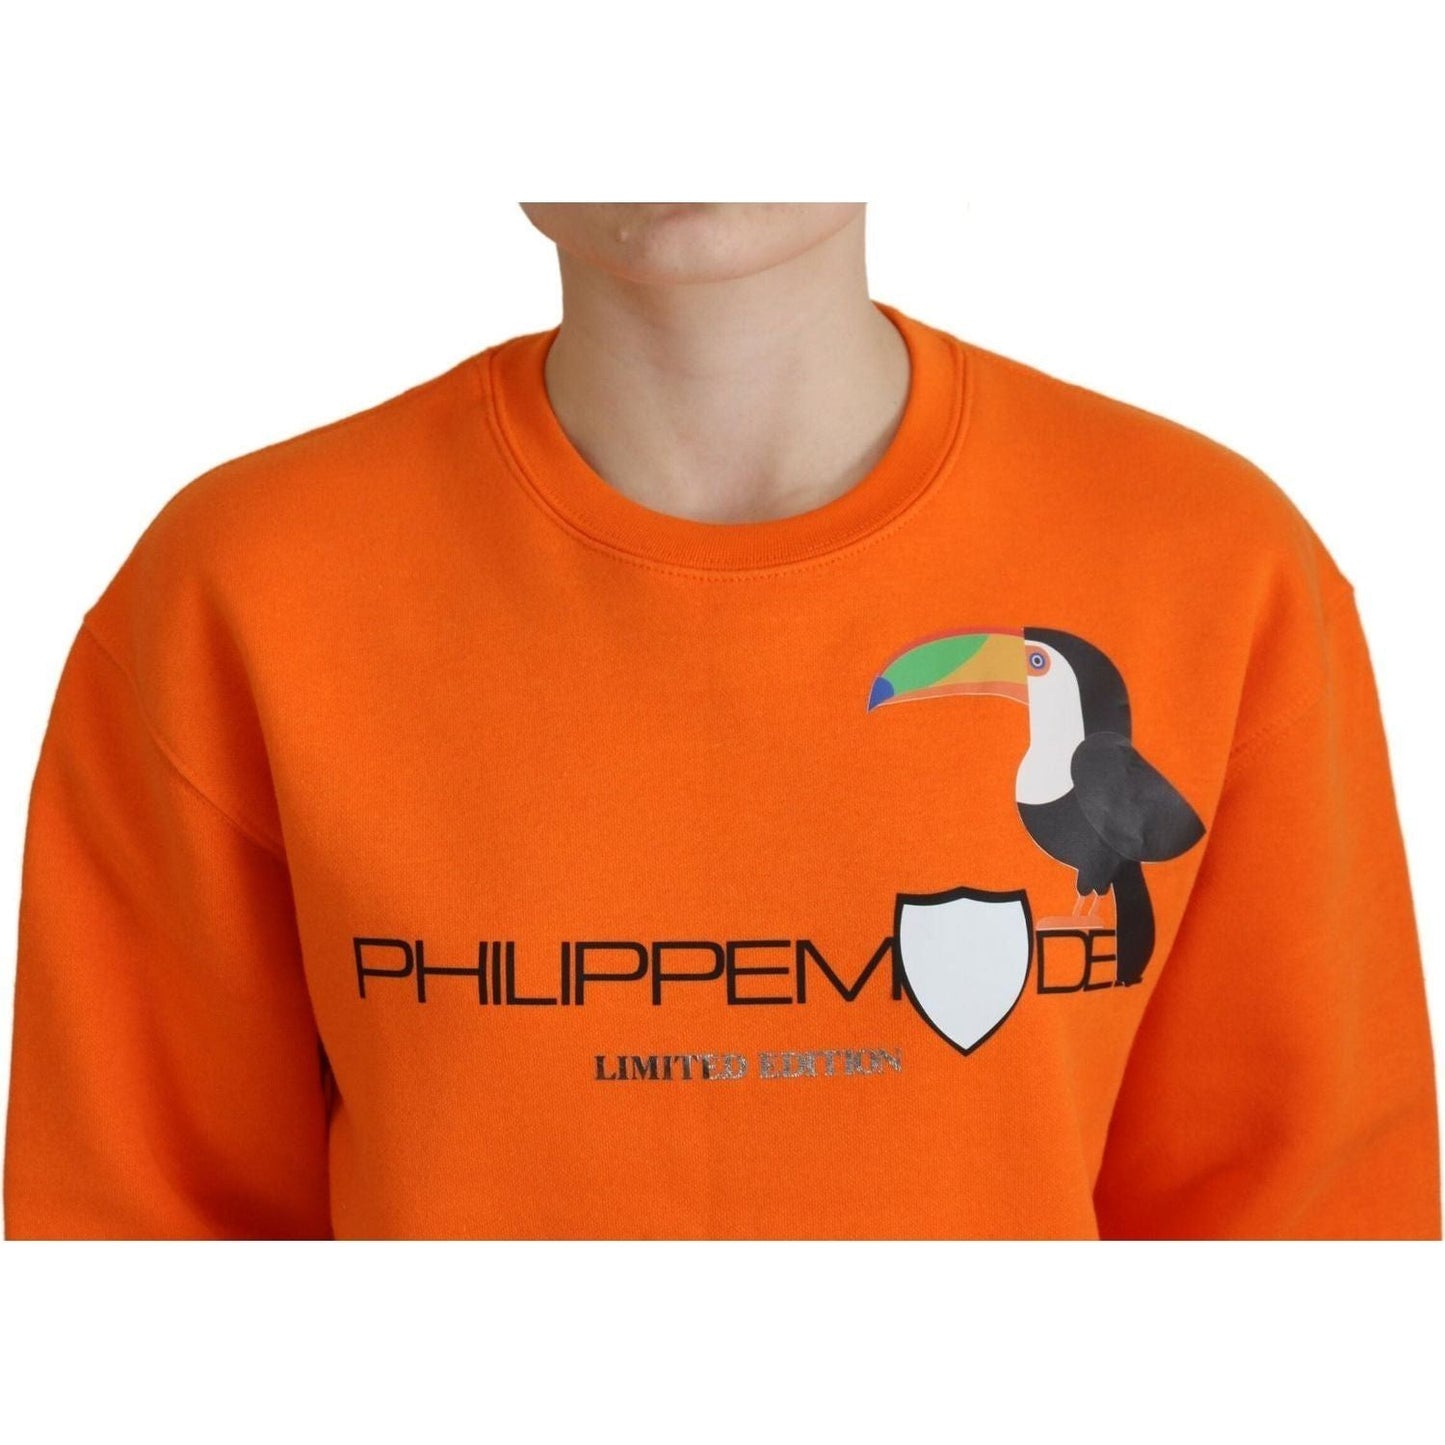 Philippe Model Chic Orange Printed Long Sleeve Pullover Sweater orange-printed-long-sleeves-pullover-sweater IMG_9322-scaled-043b41f2-c7a.jpg